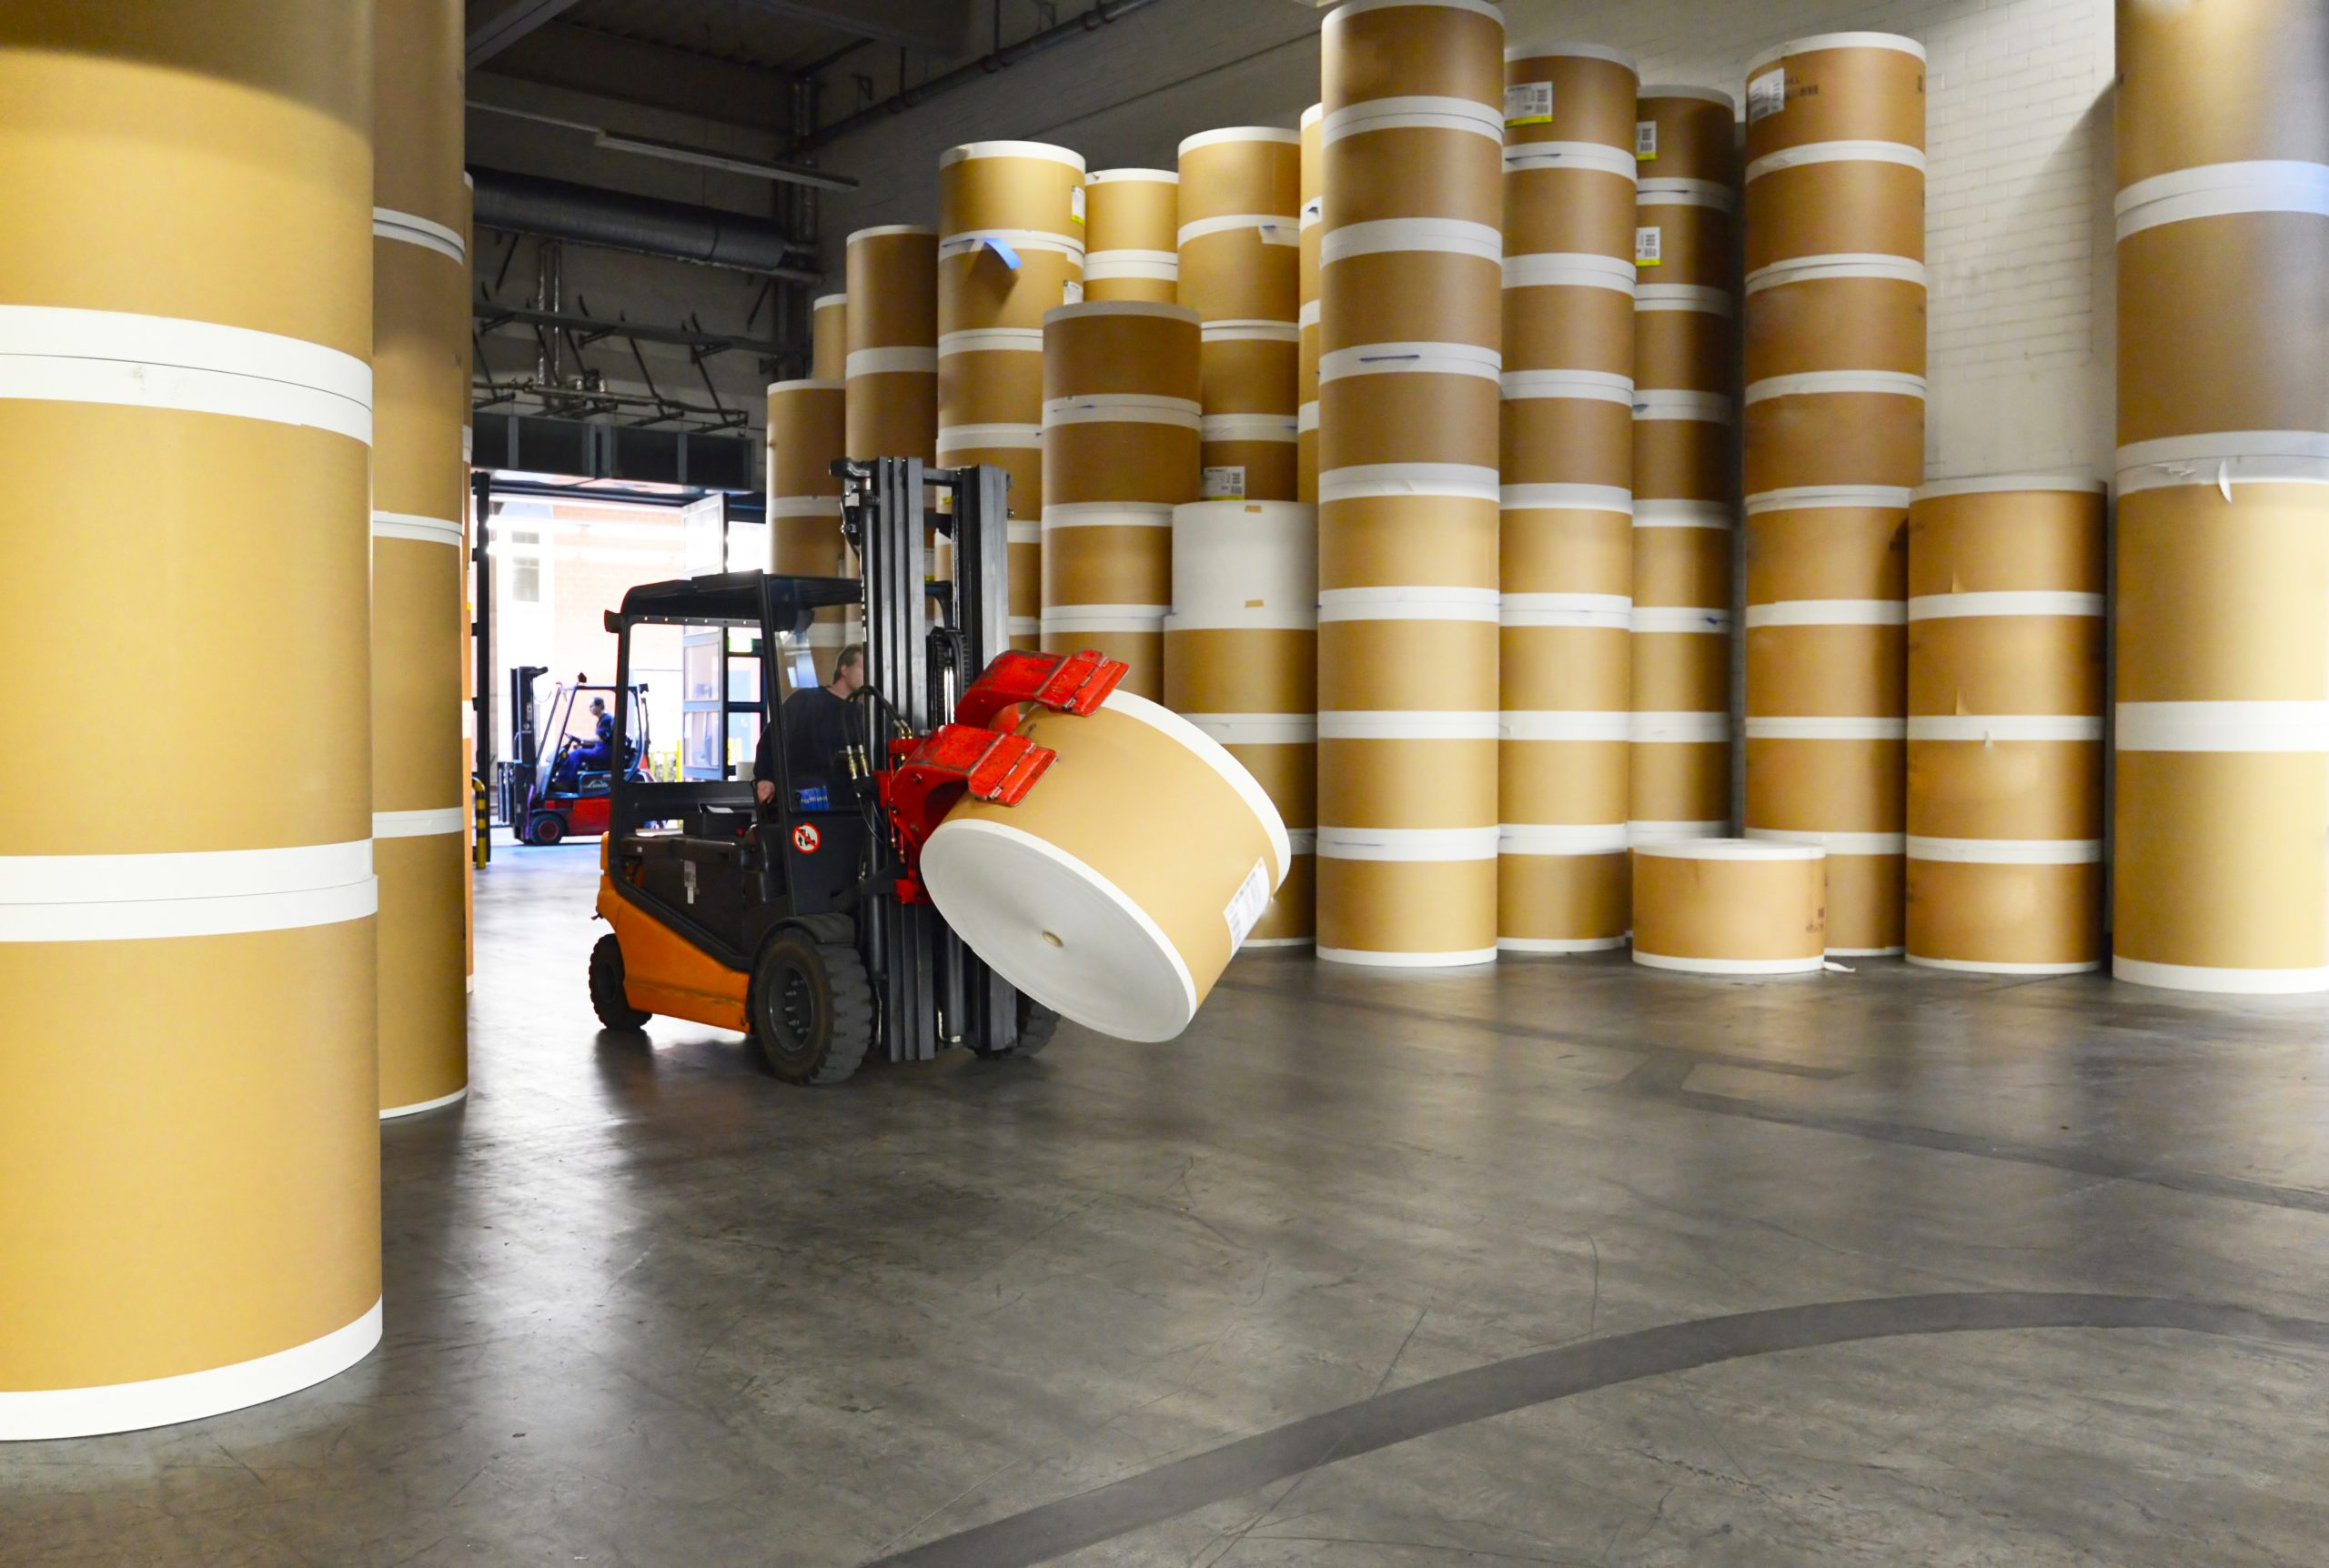 USXPorts Warehouse of Paper Rolls